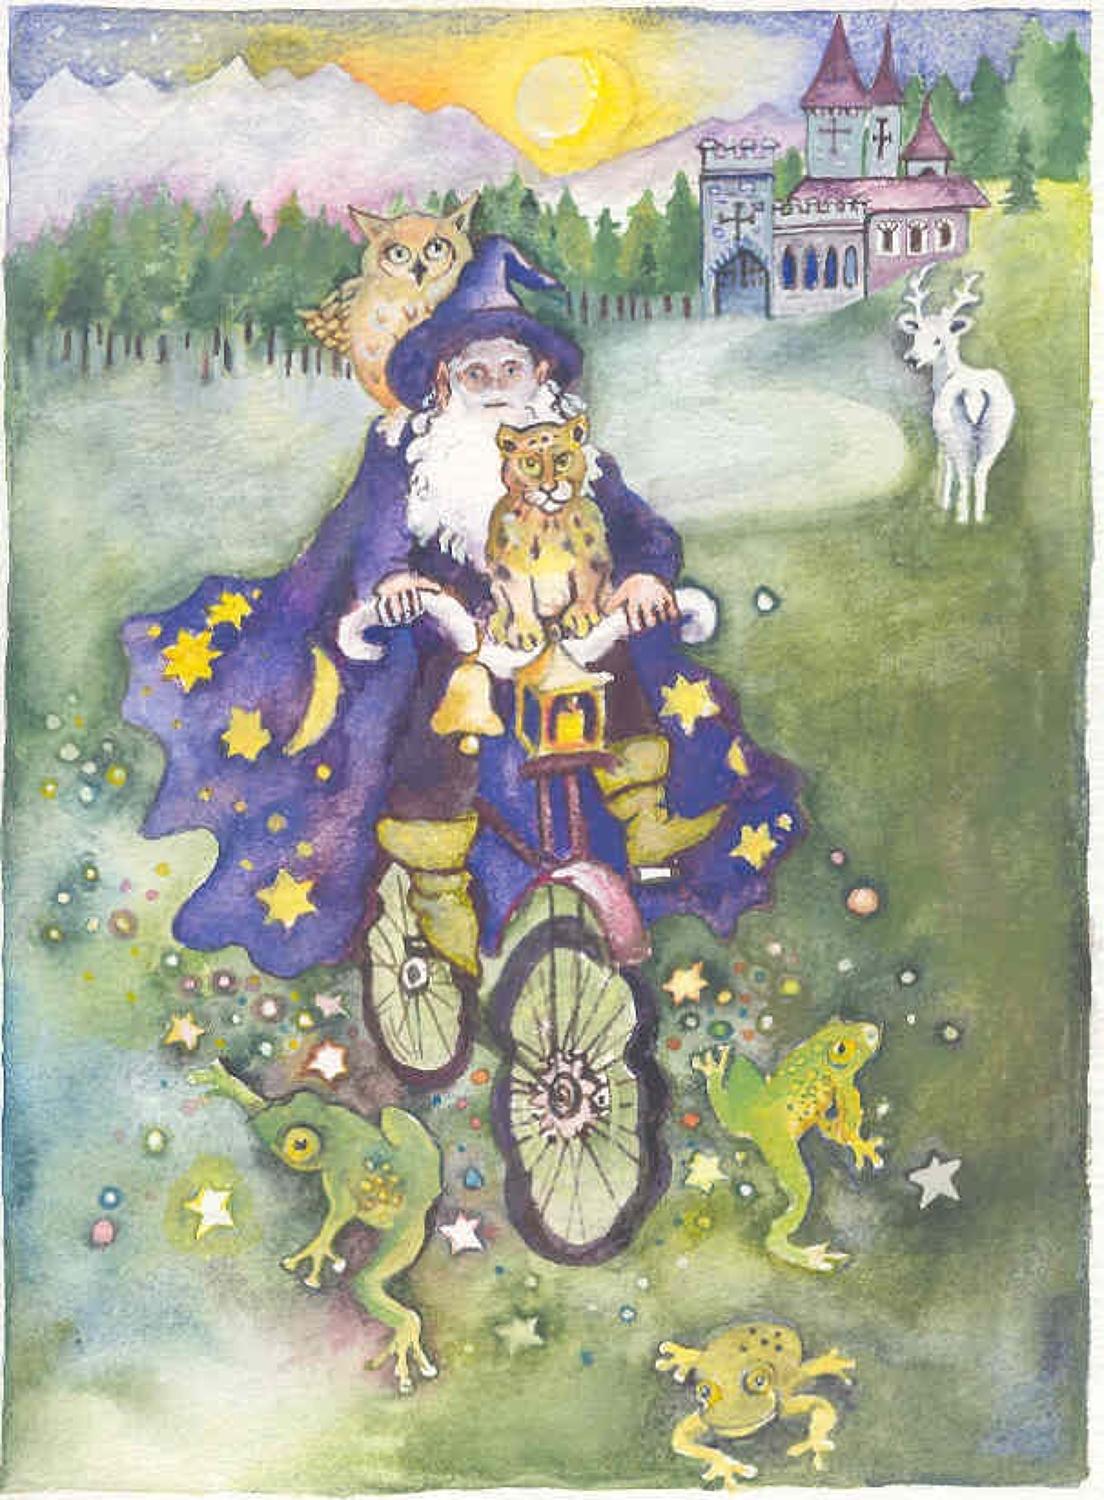 Wizard on a bike